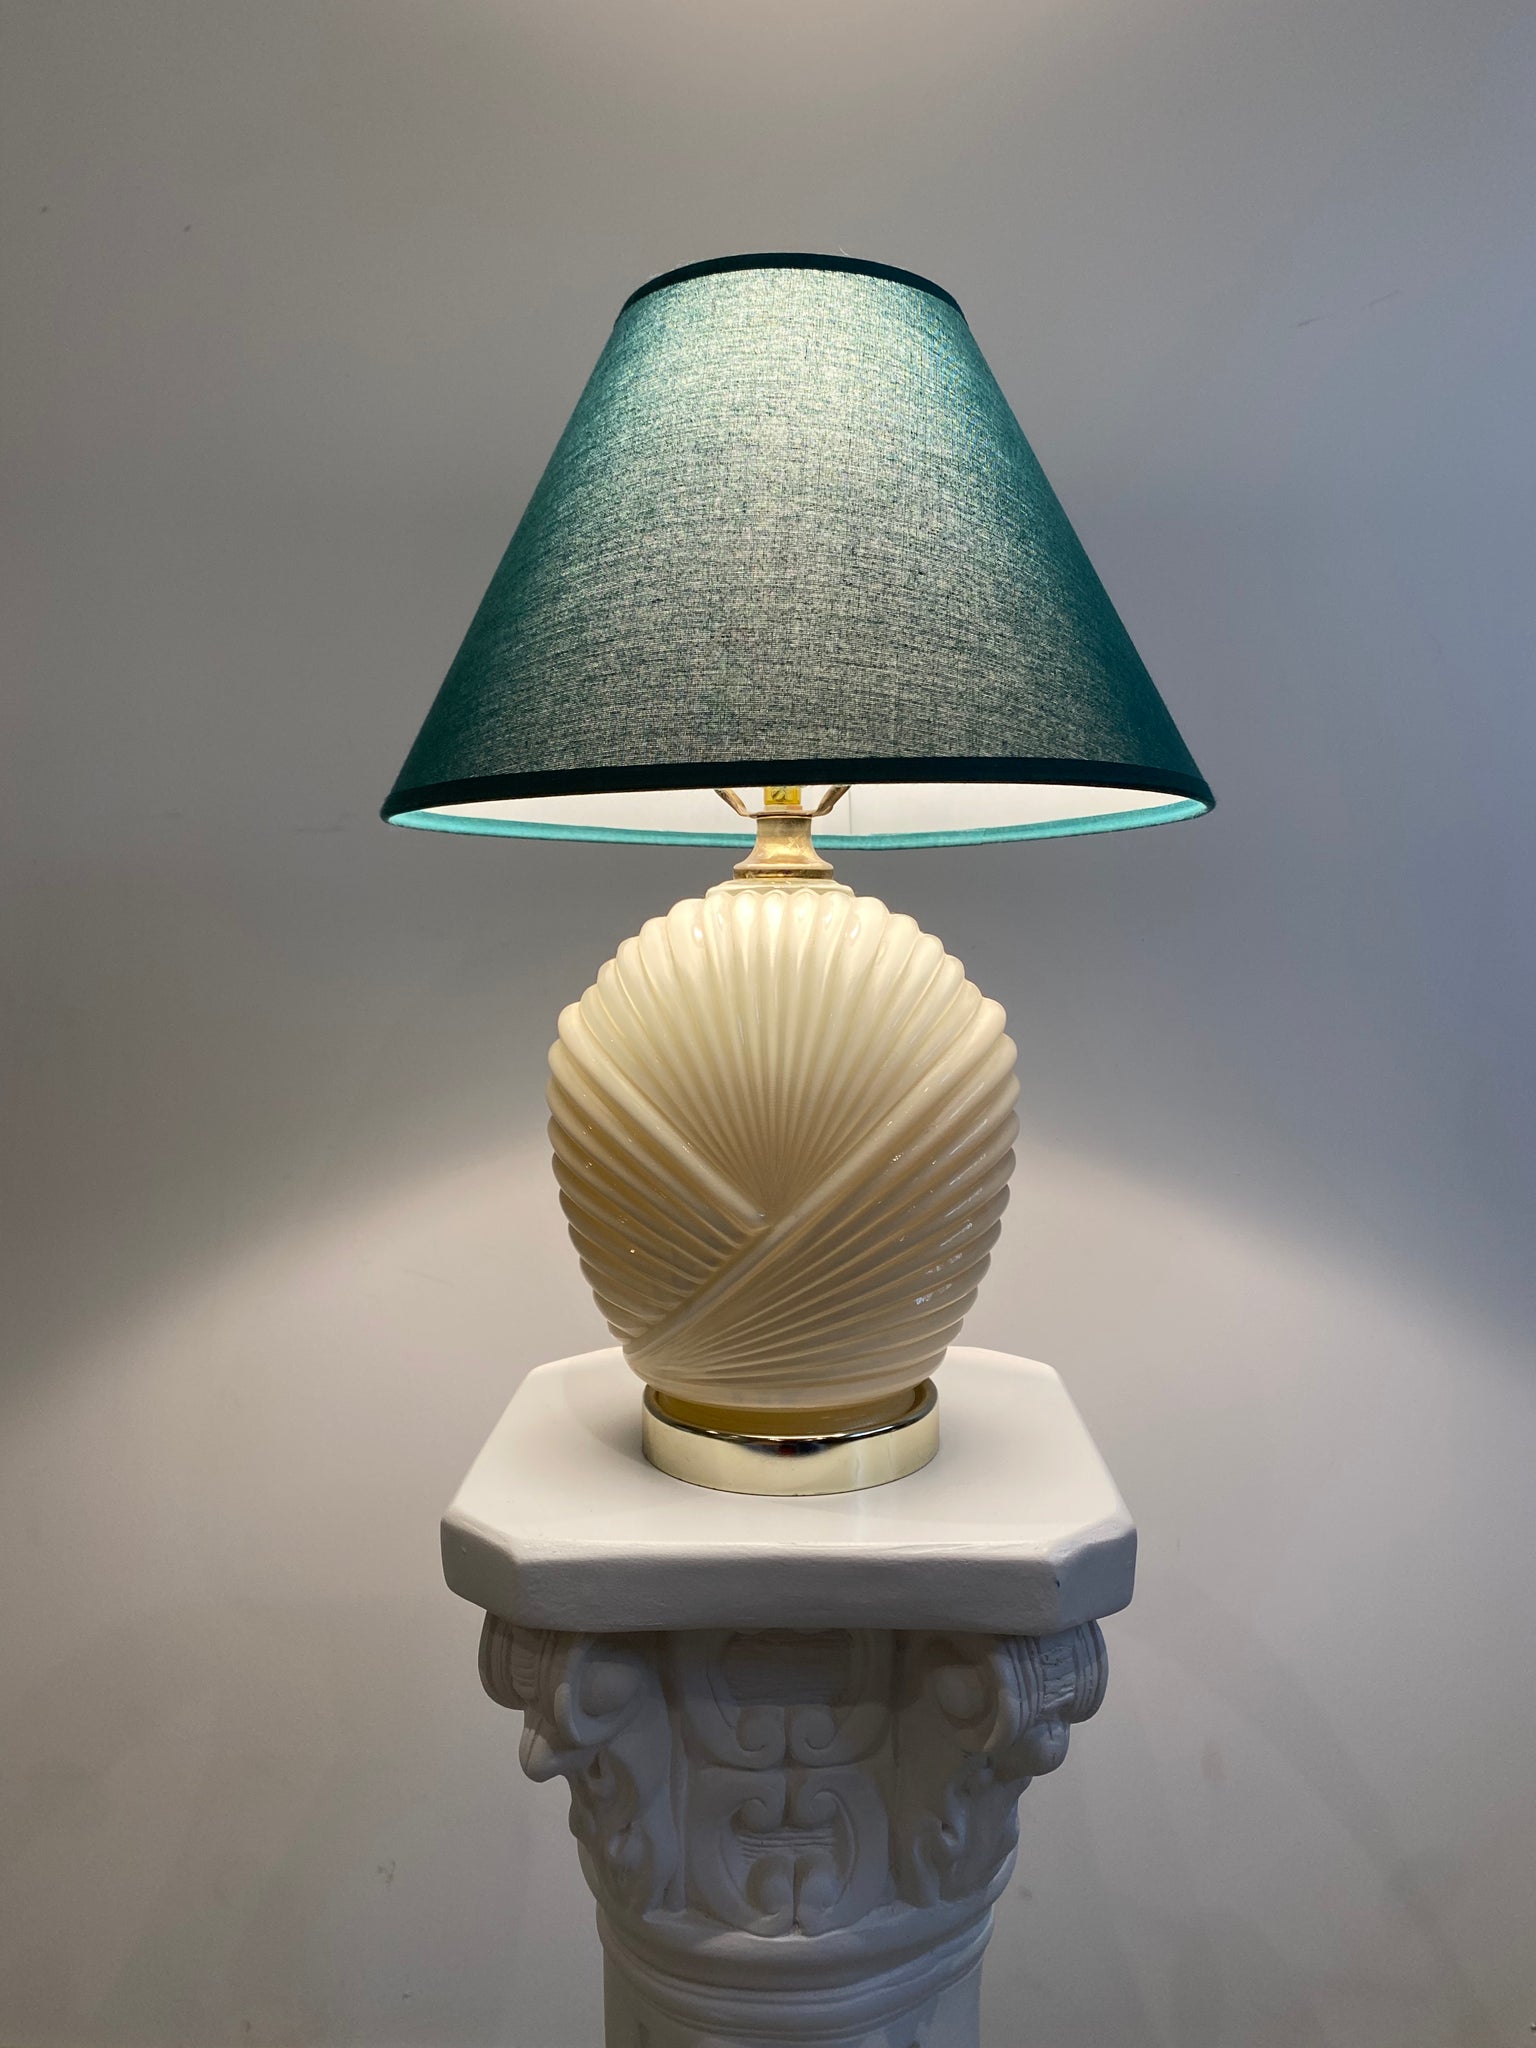 Off-white art deco glass seashell lamps